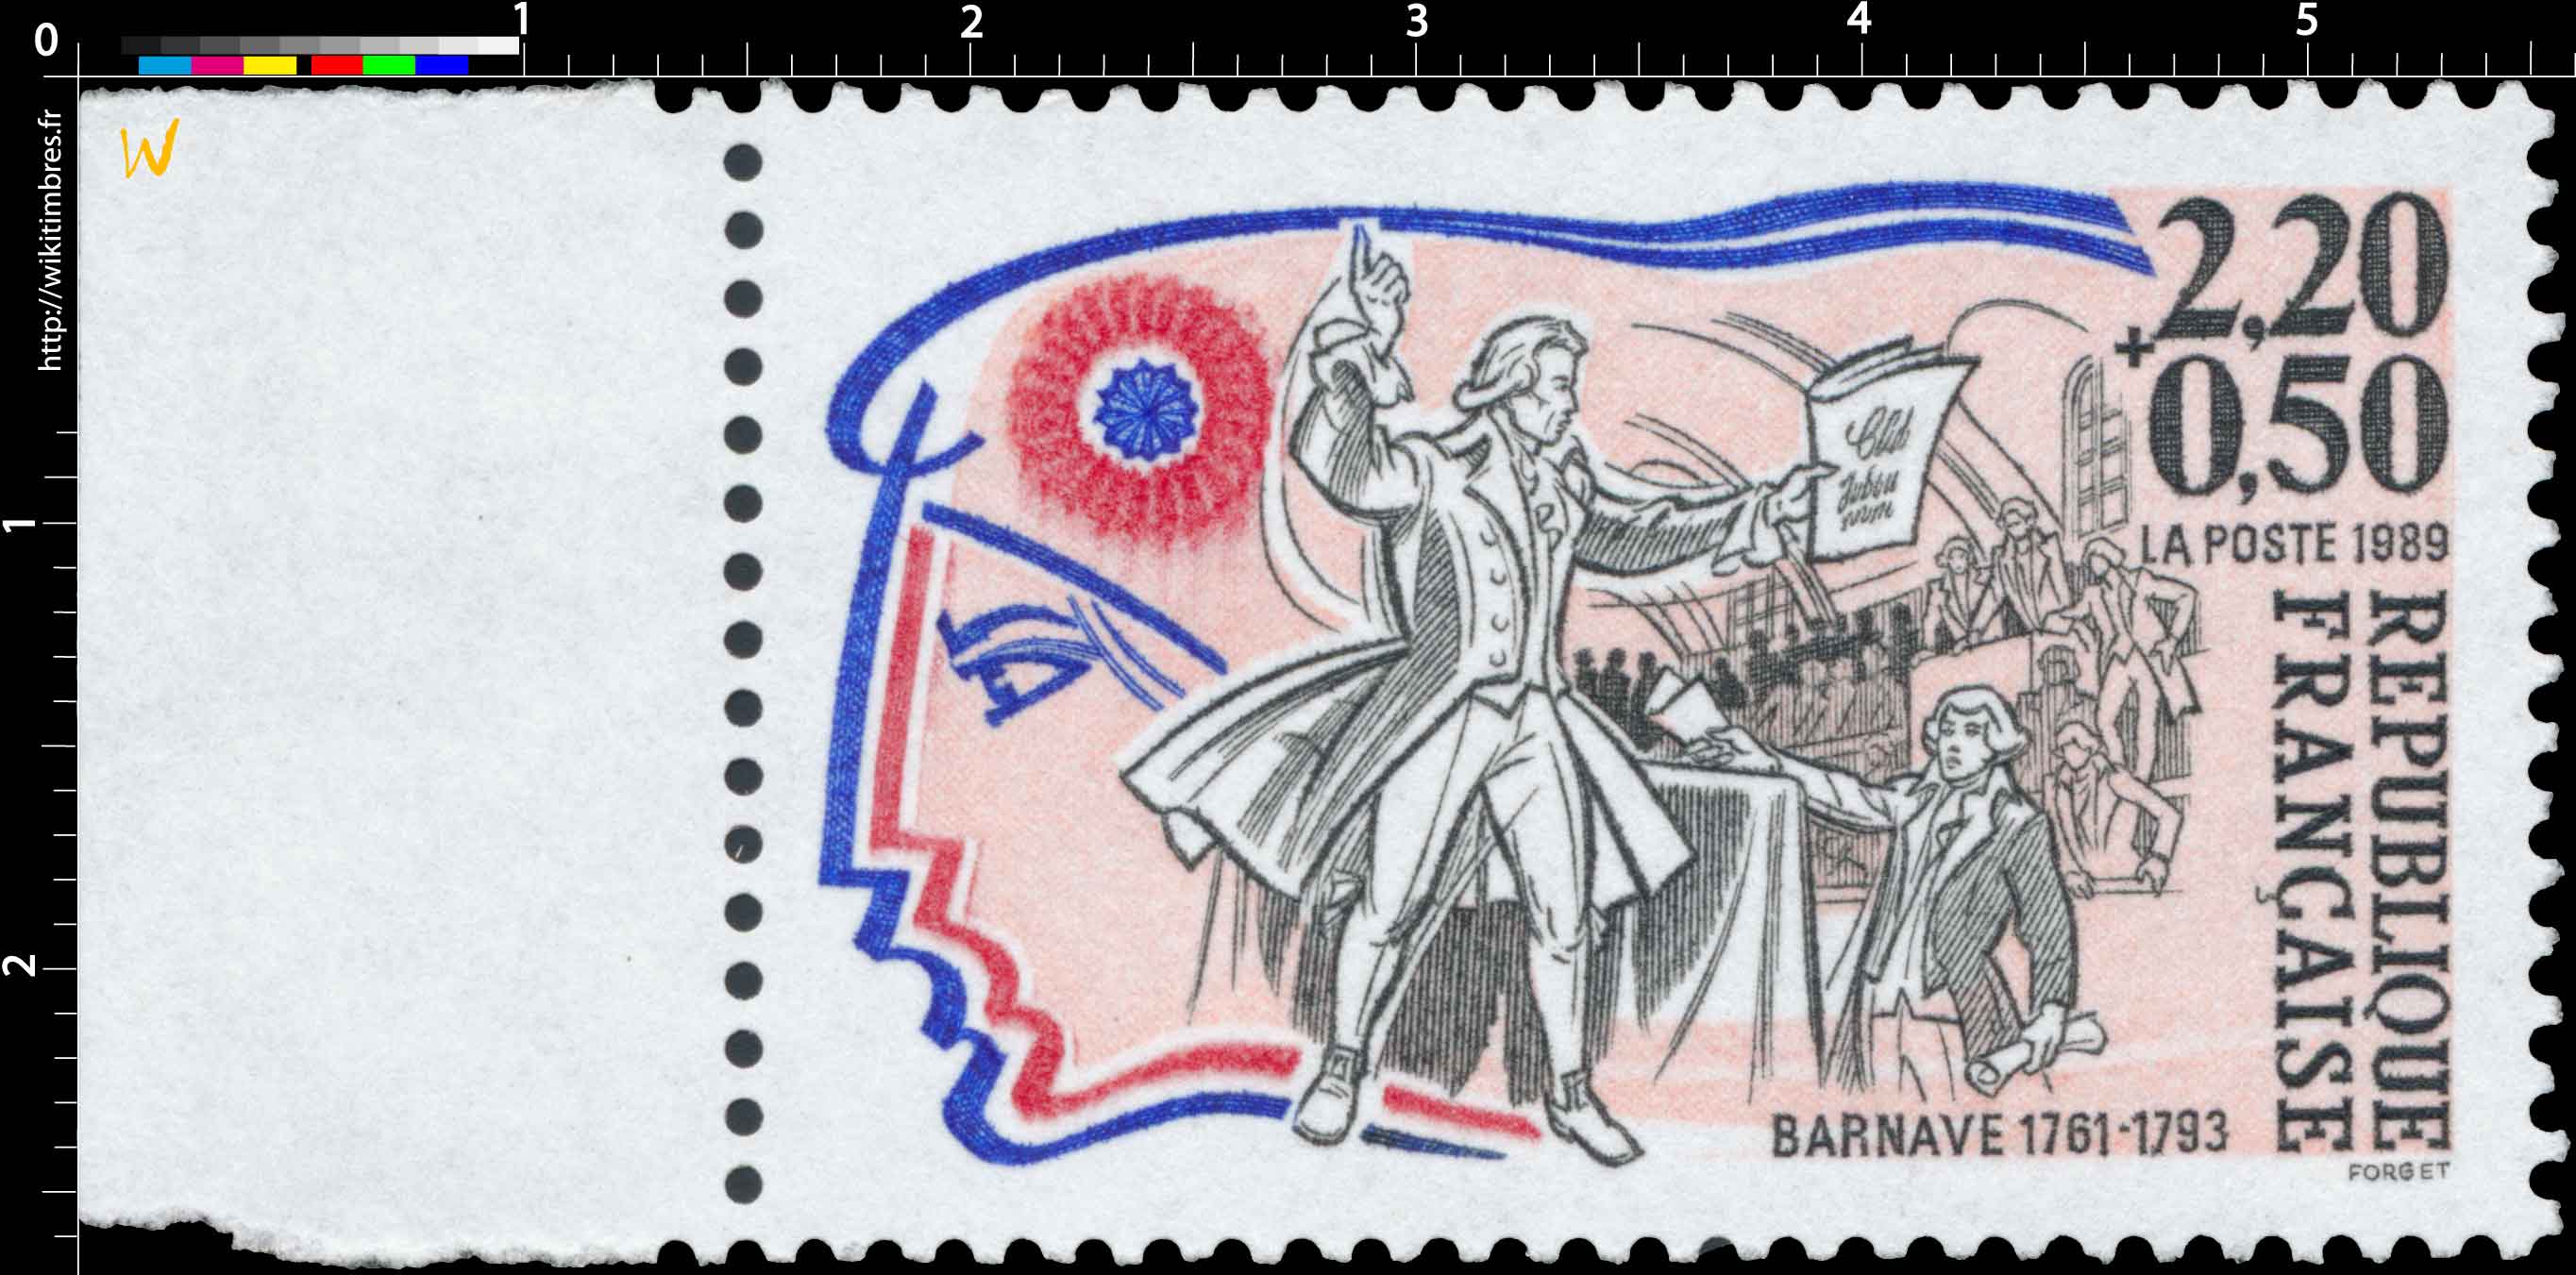 1989 BARNAVE 1761-1793